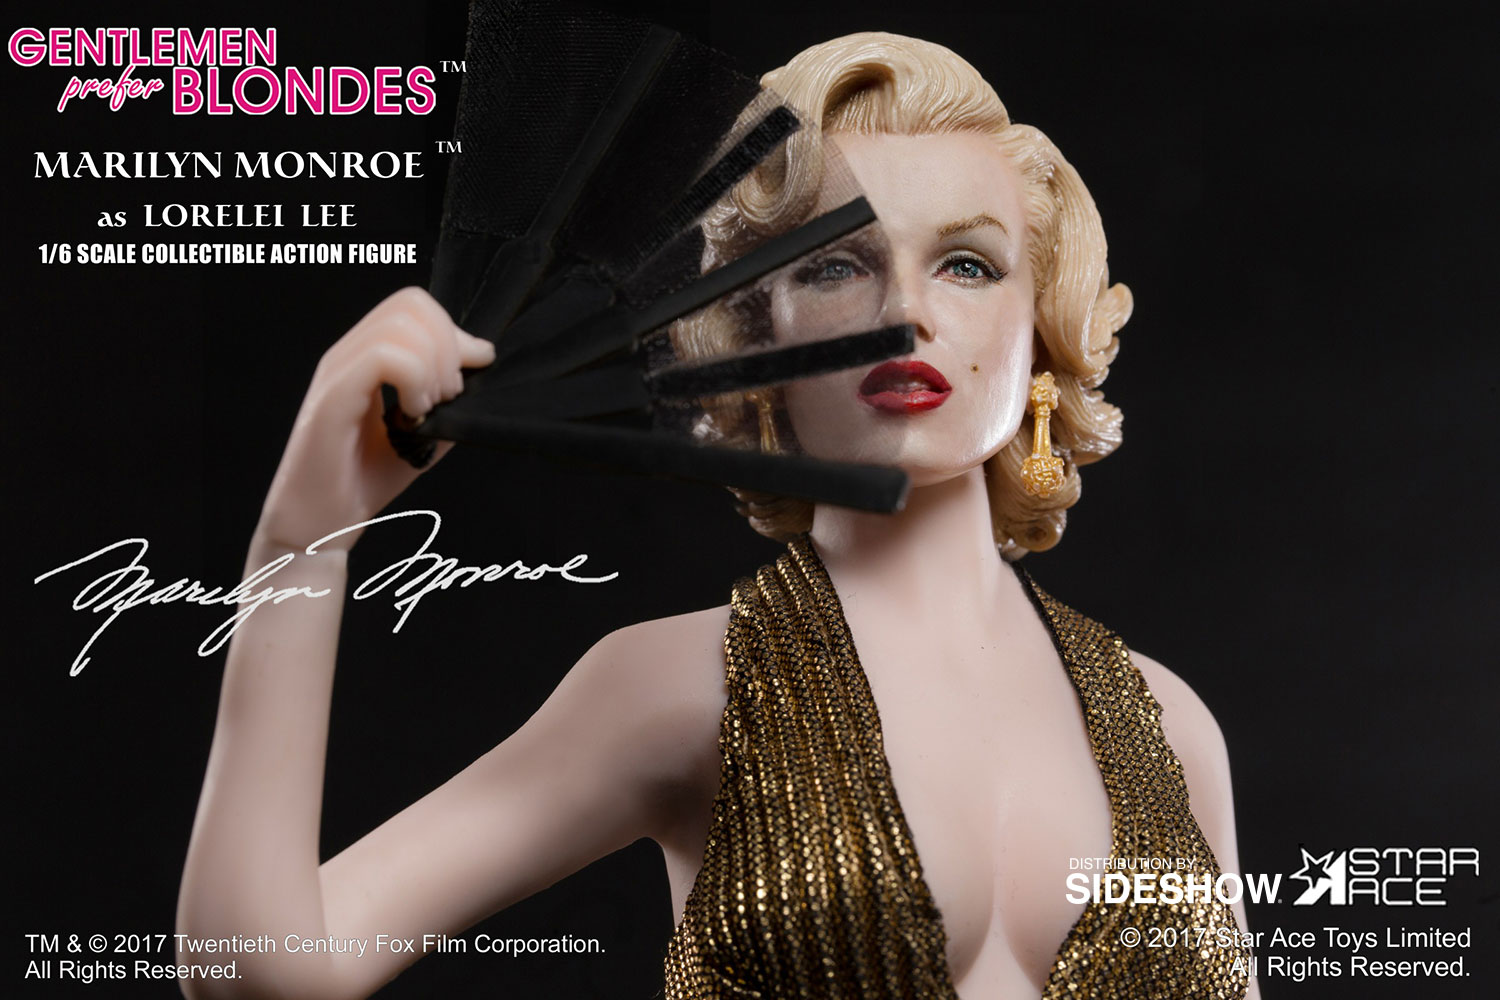 STAR ACE - Marilyn Monroe from “Gentlemen Prefer Blondes" Marilyn-monroe-as-lorelei-lee-gold-dress-version-sixth-scale-star-ace-902838-03